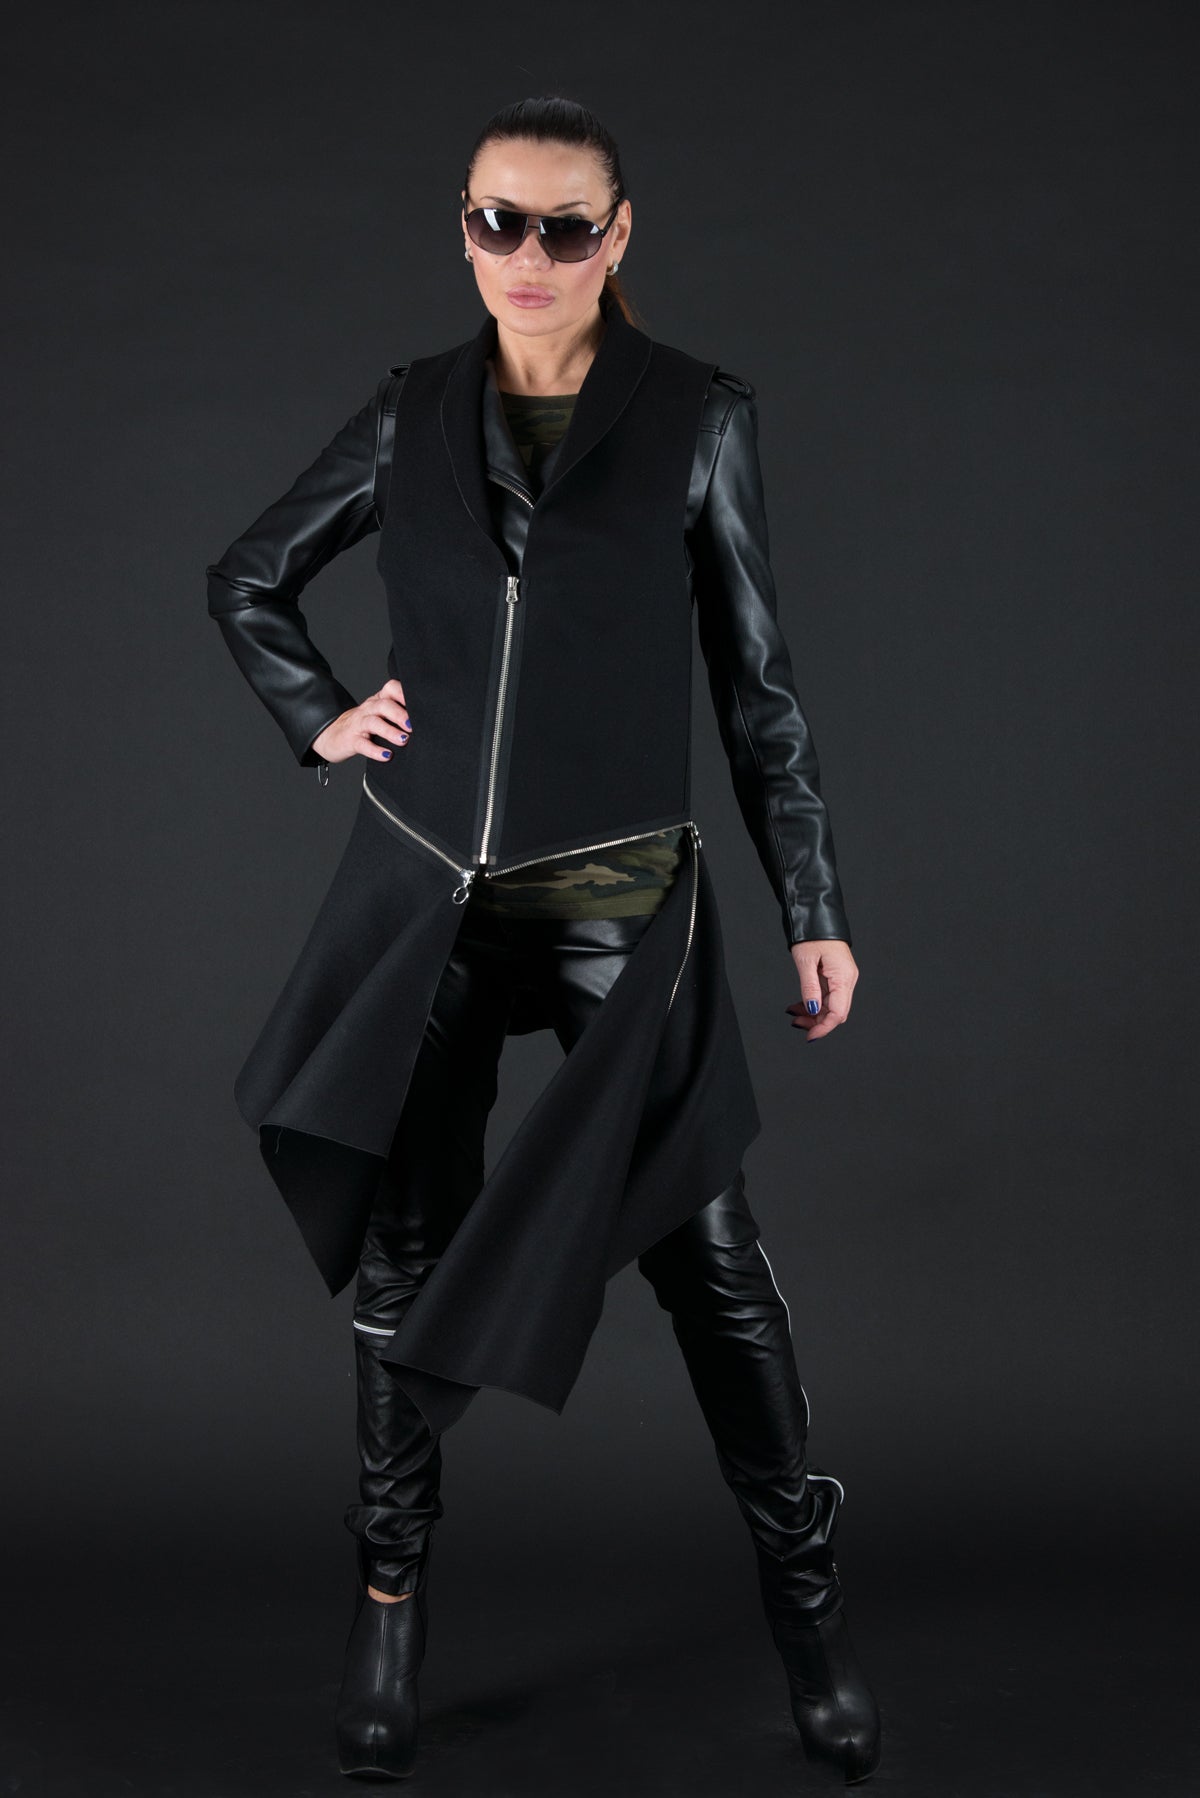 Winter Black Sleeveless Wool Cashmere Vest, Cardigans & Vests